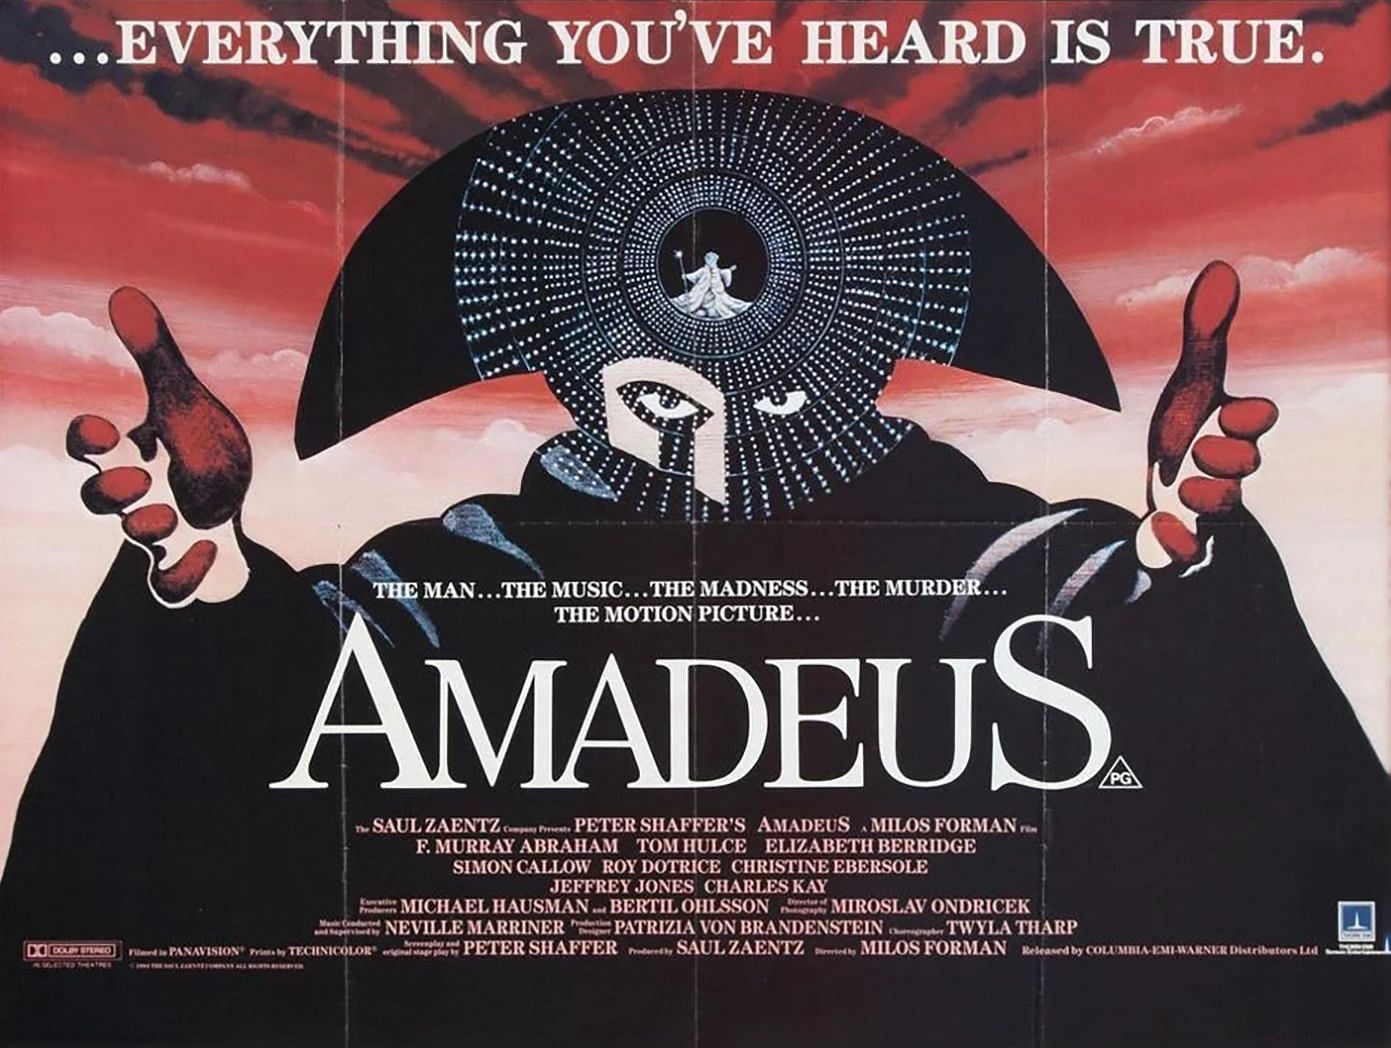 Amadeus (Image via Orion Pictures)